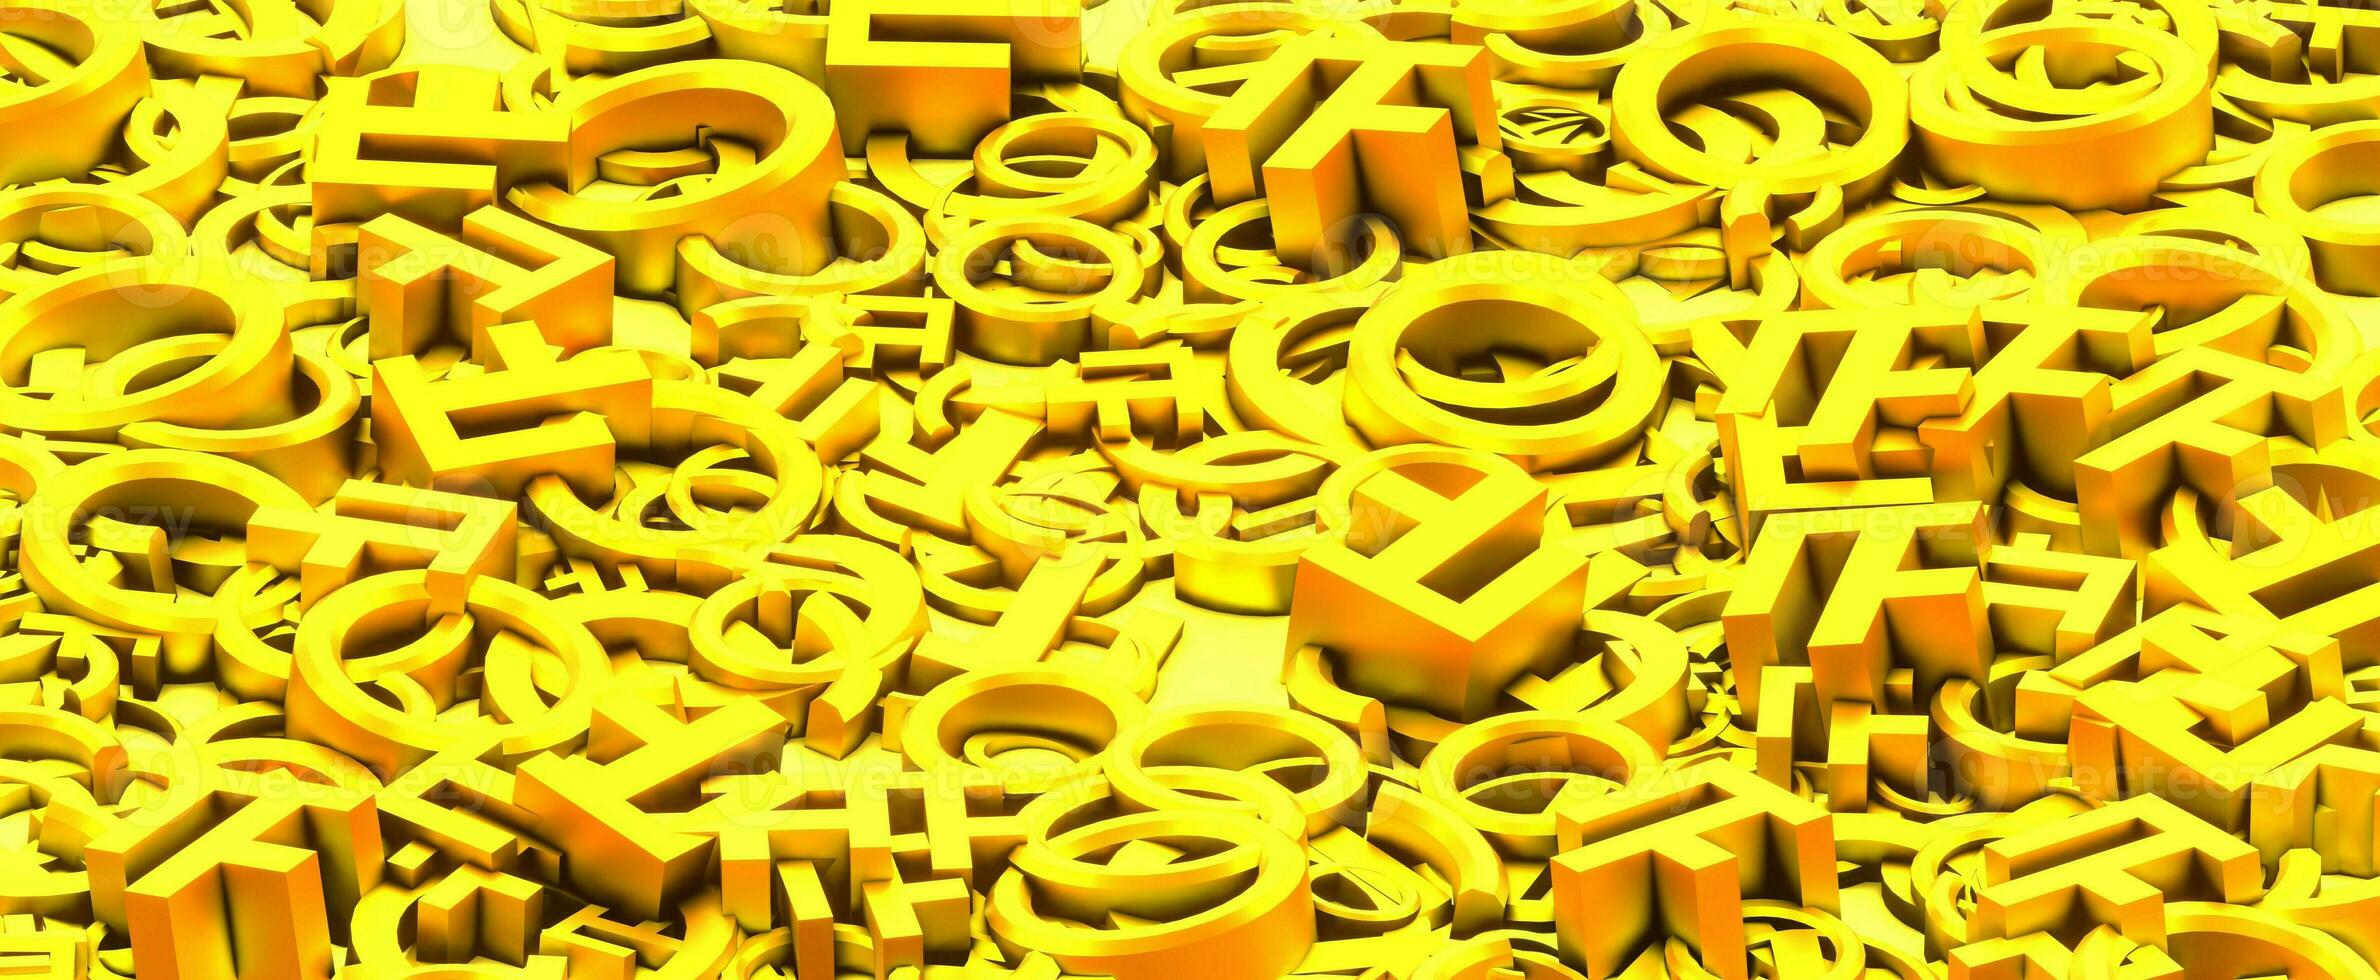 Golden symbols of cryptocurrency piled up background photo